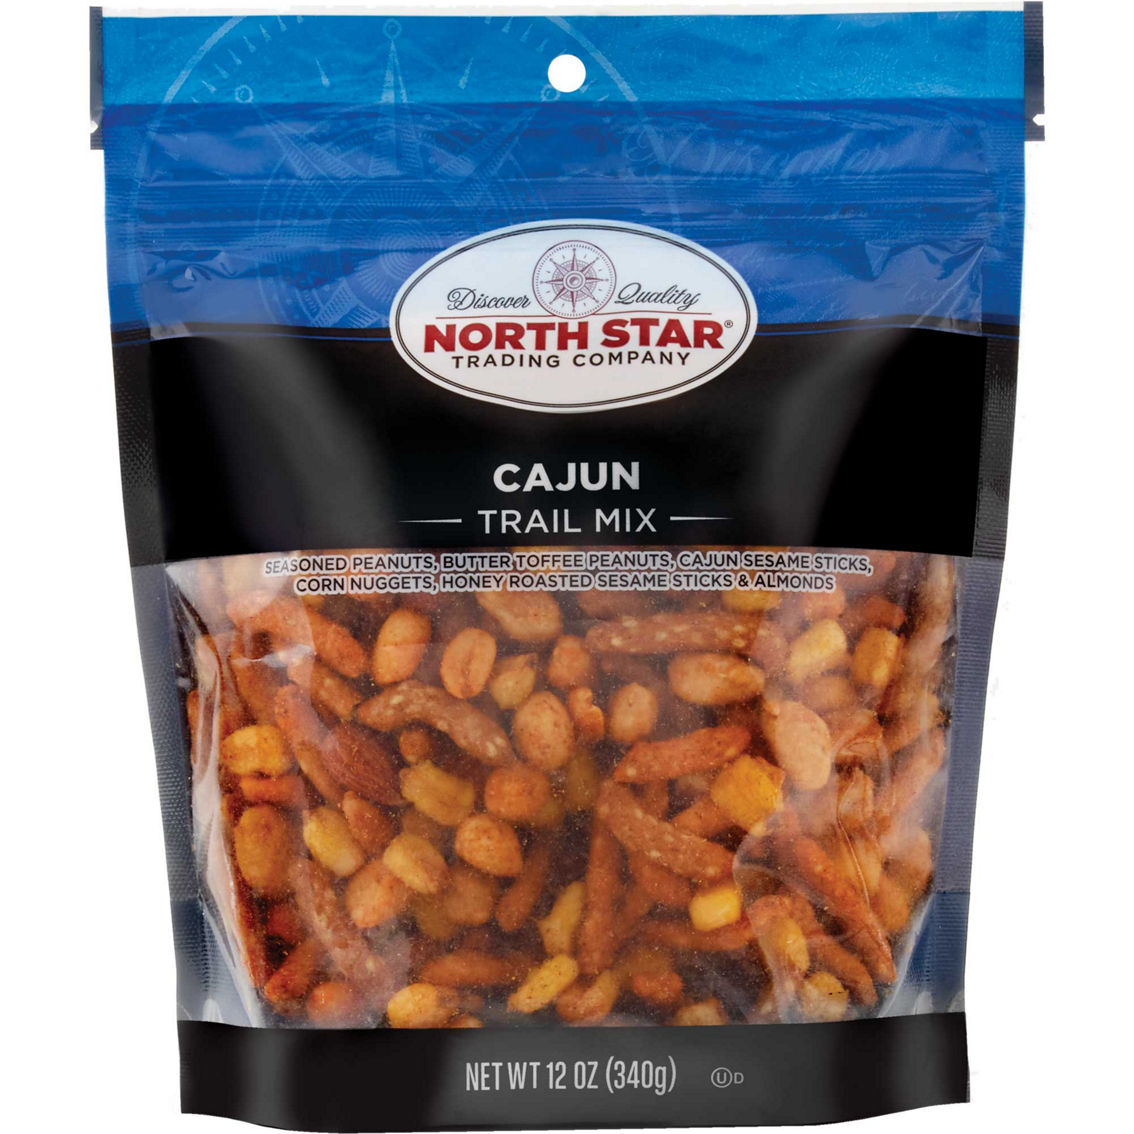 North Star Trading Company Cajun Trail Mix 12 oz.